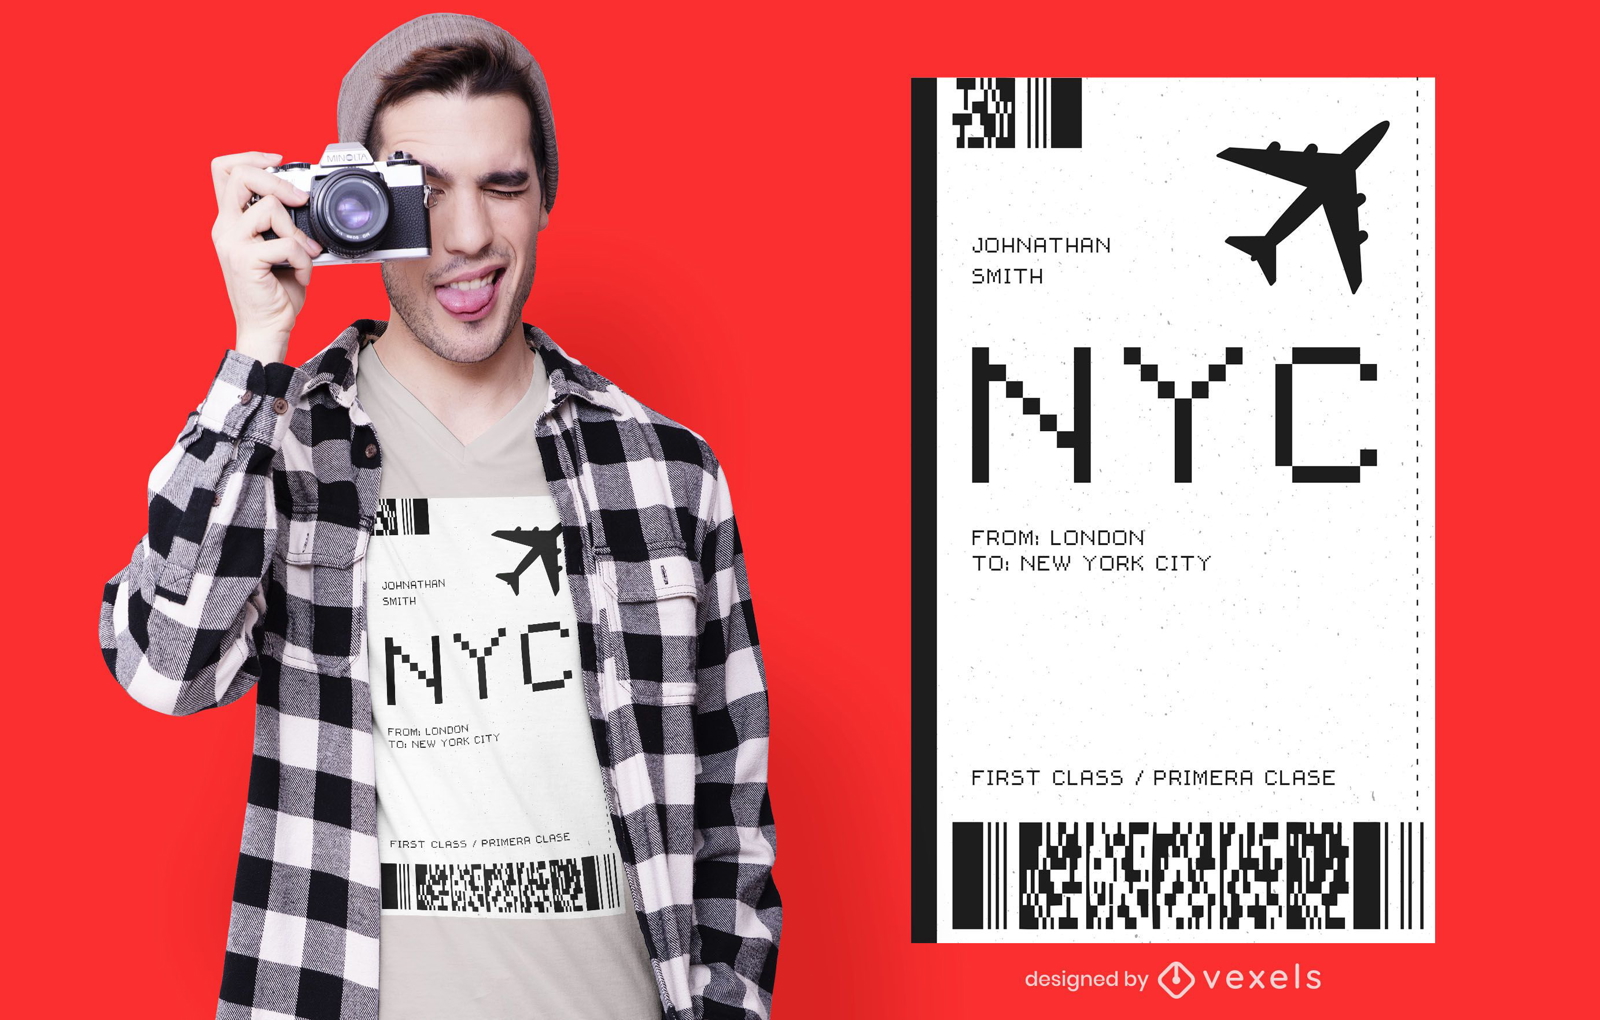 NYC Plane Ticket T-shirt Design